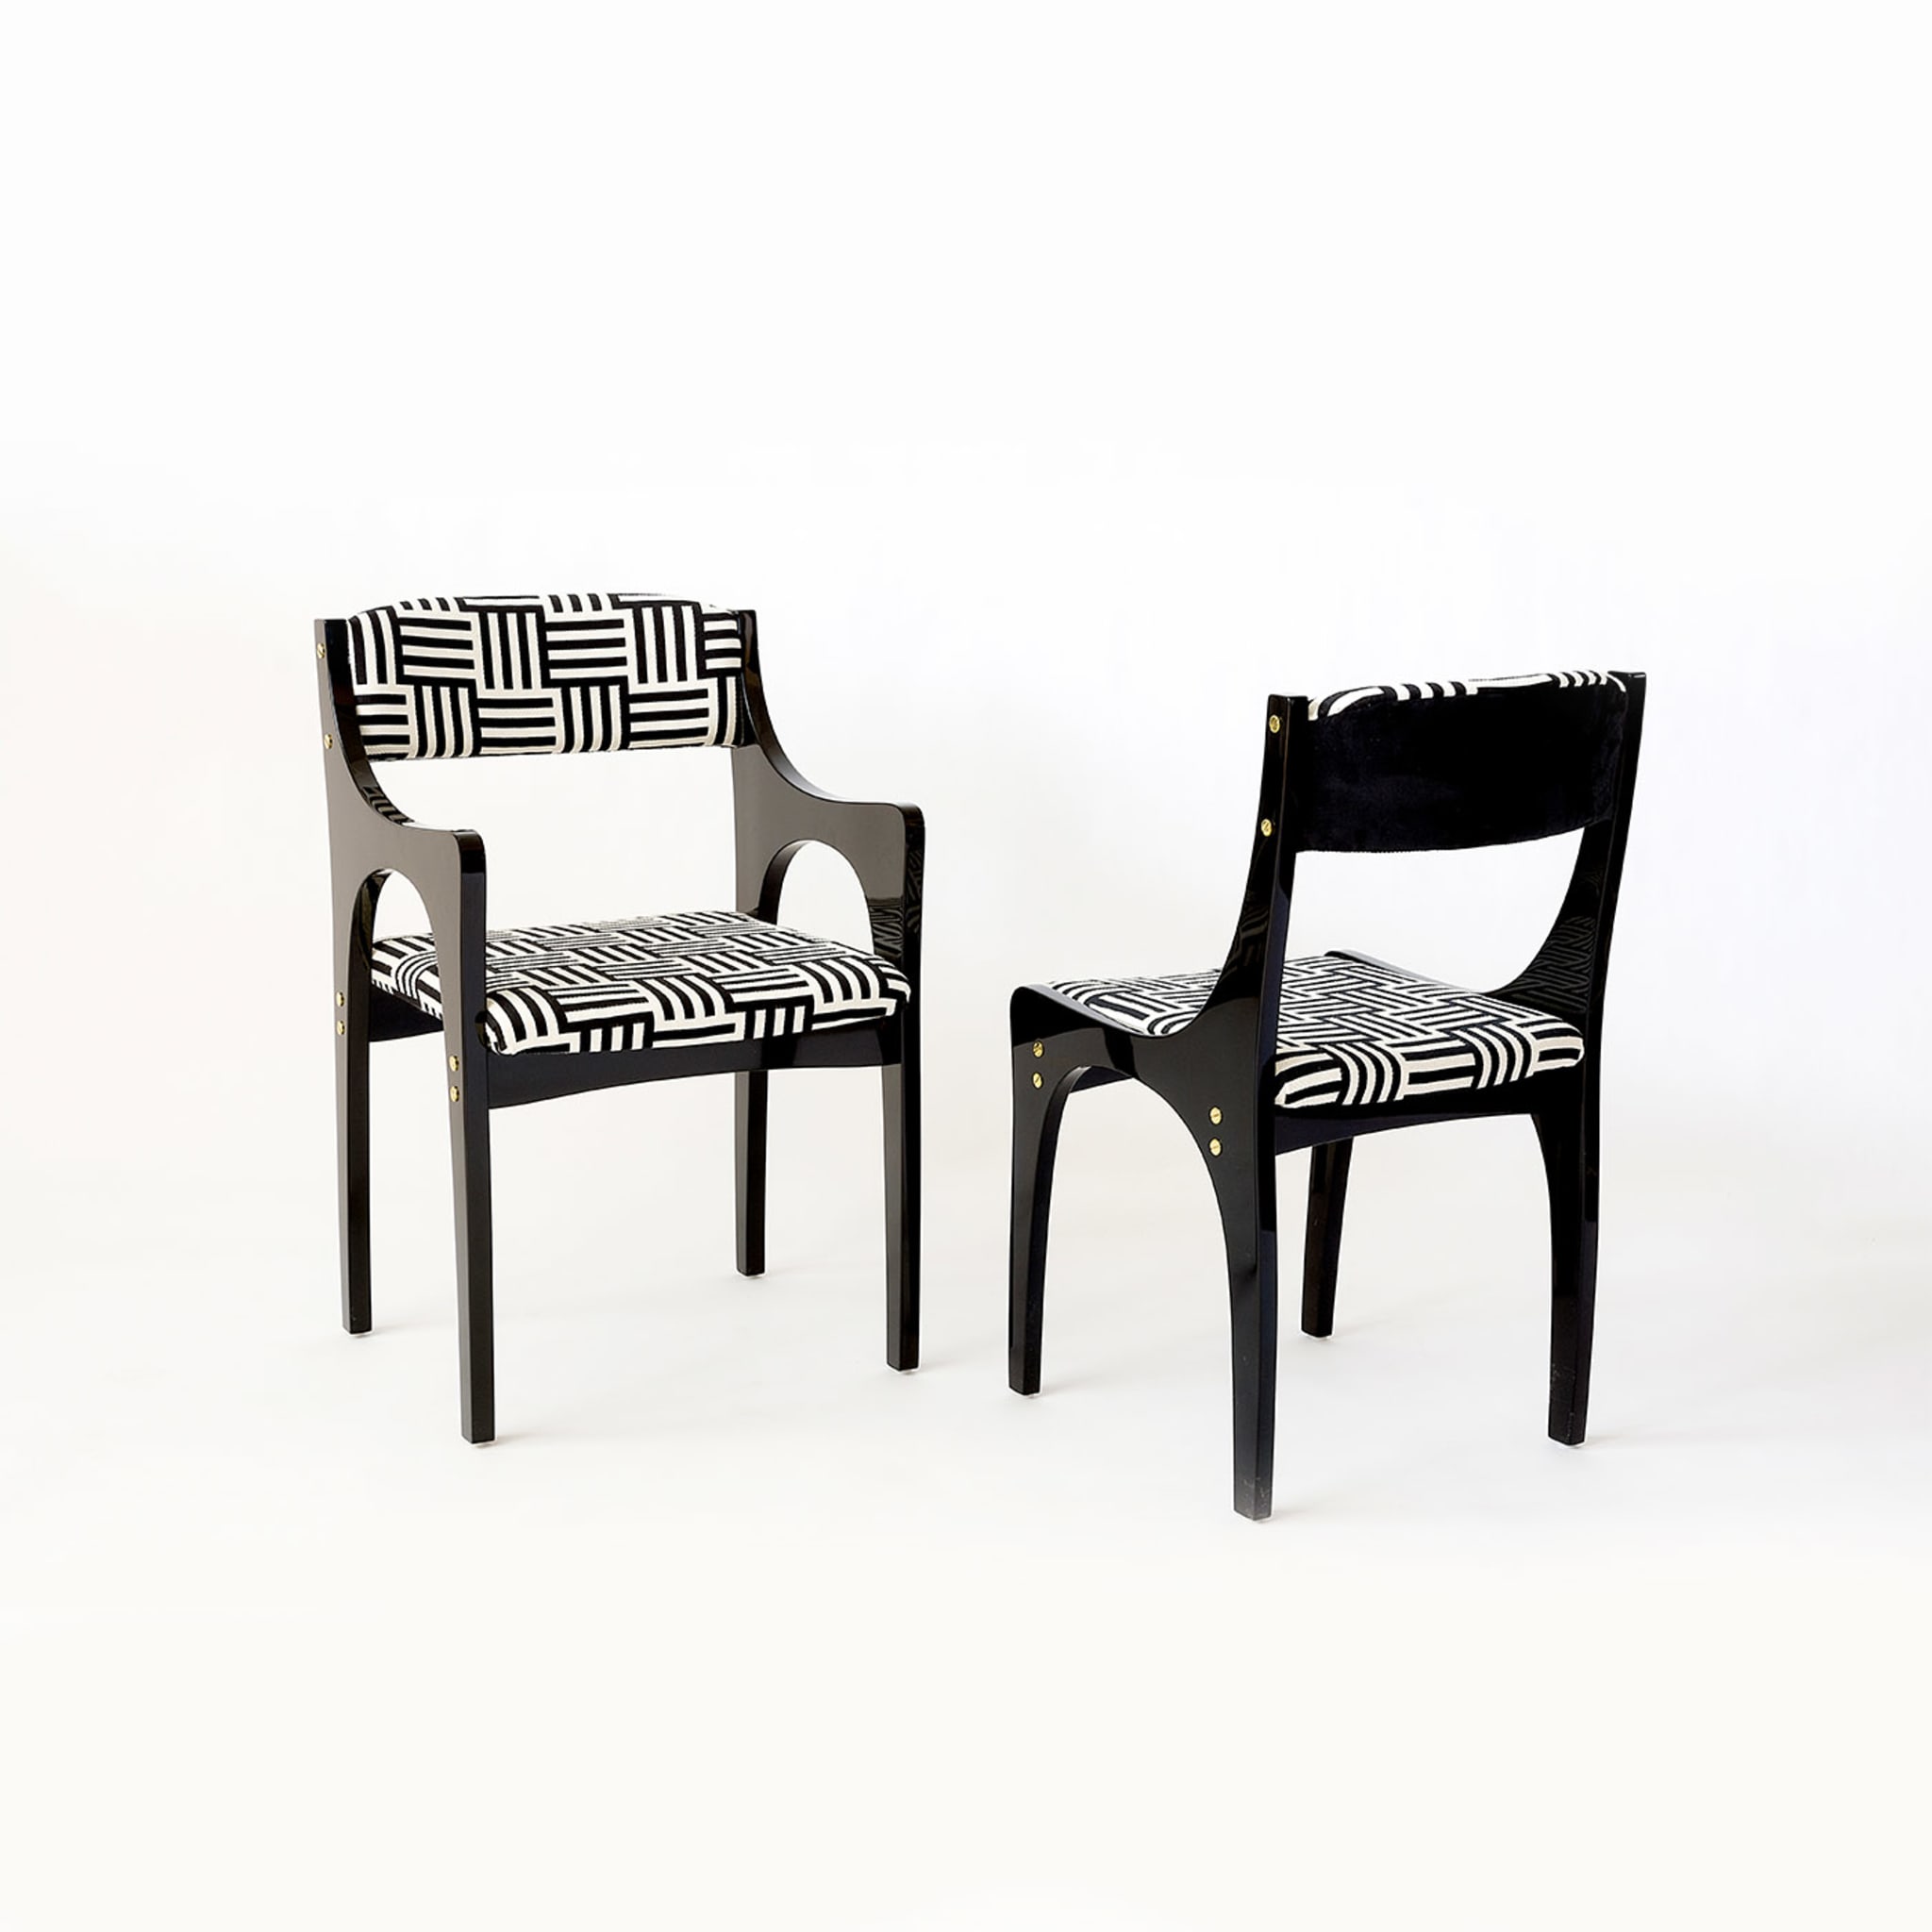 Lola 50's-Inspired Black & White Chair - Alternative view 3